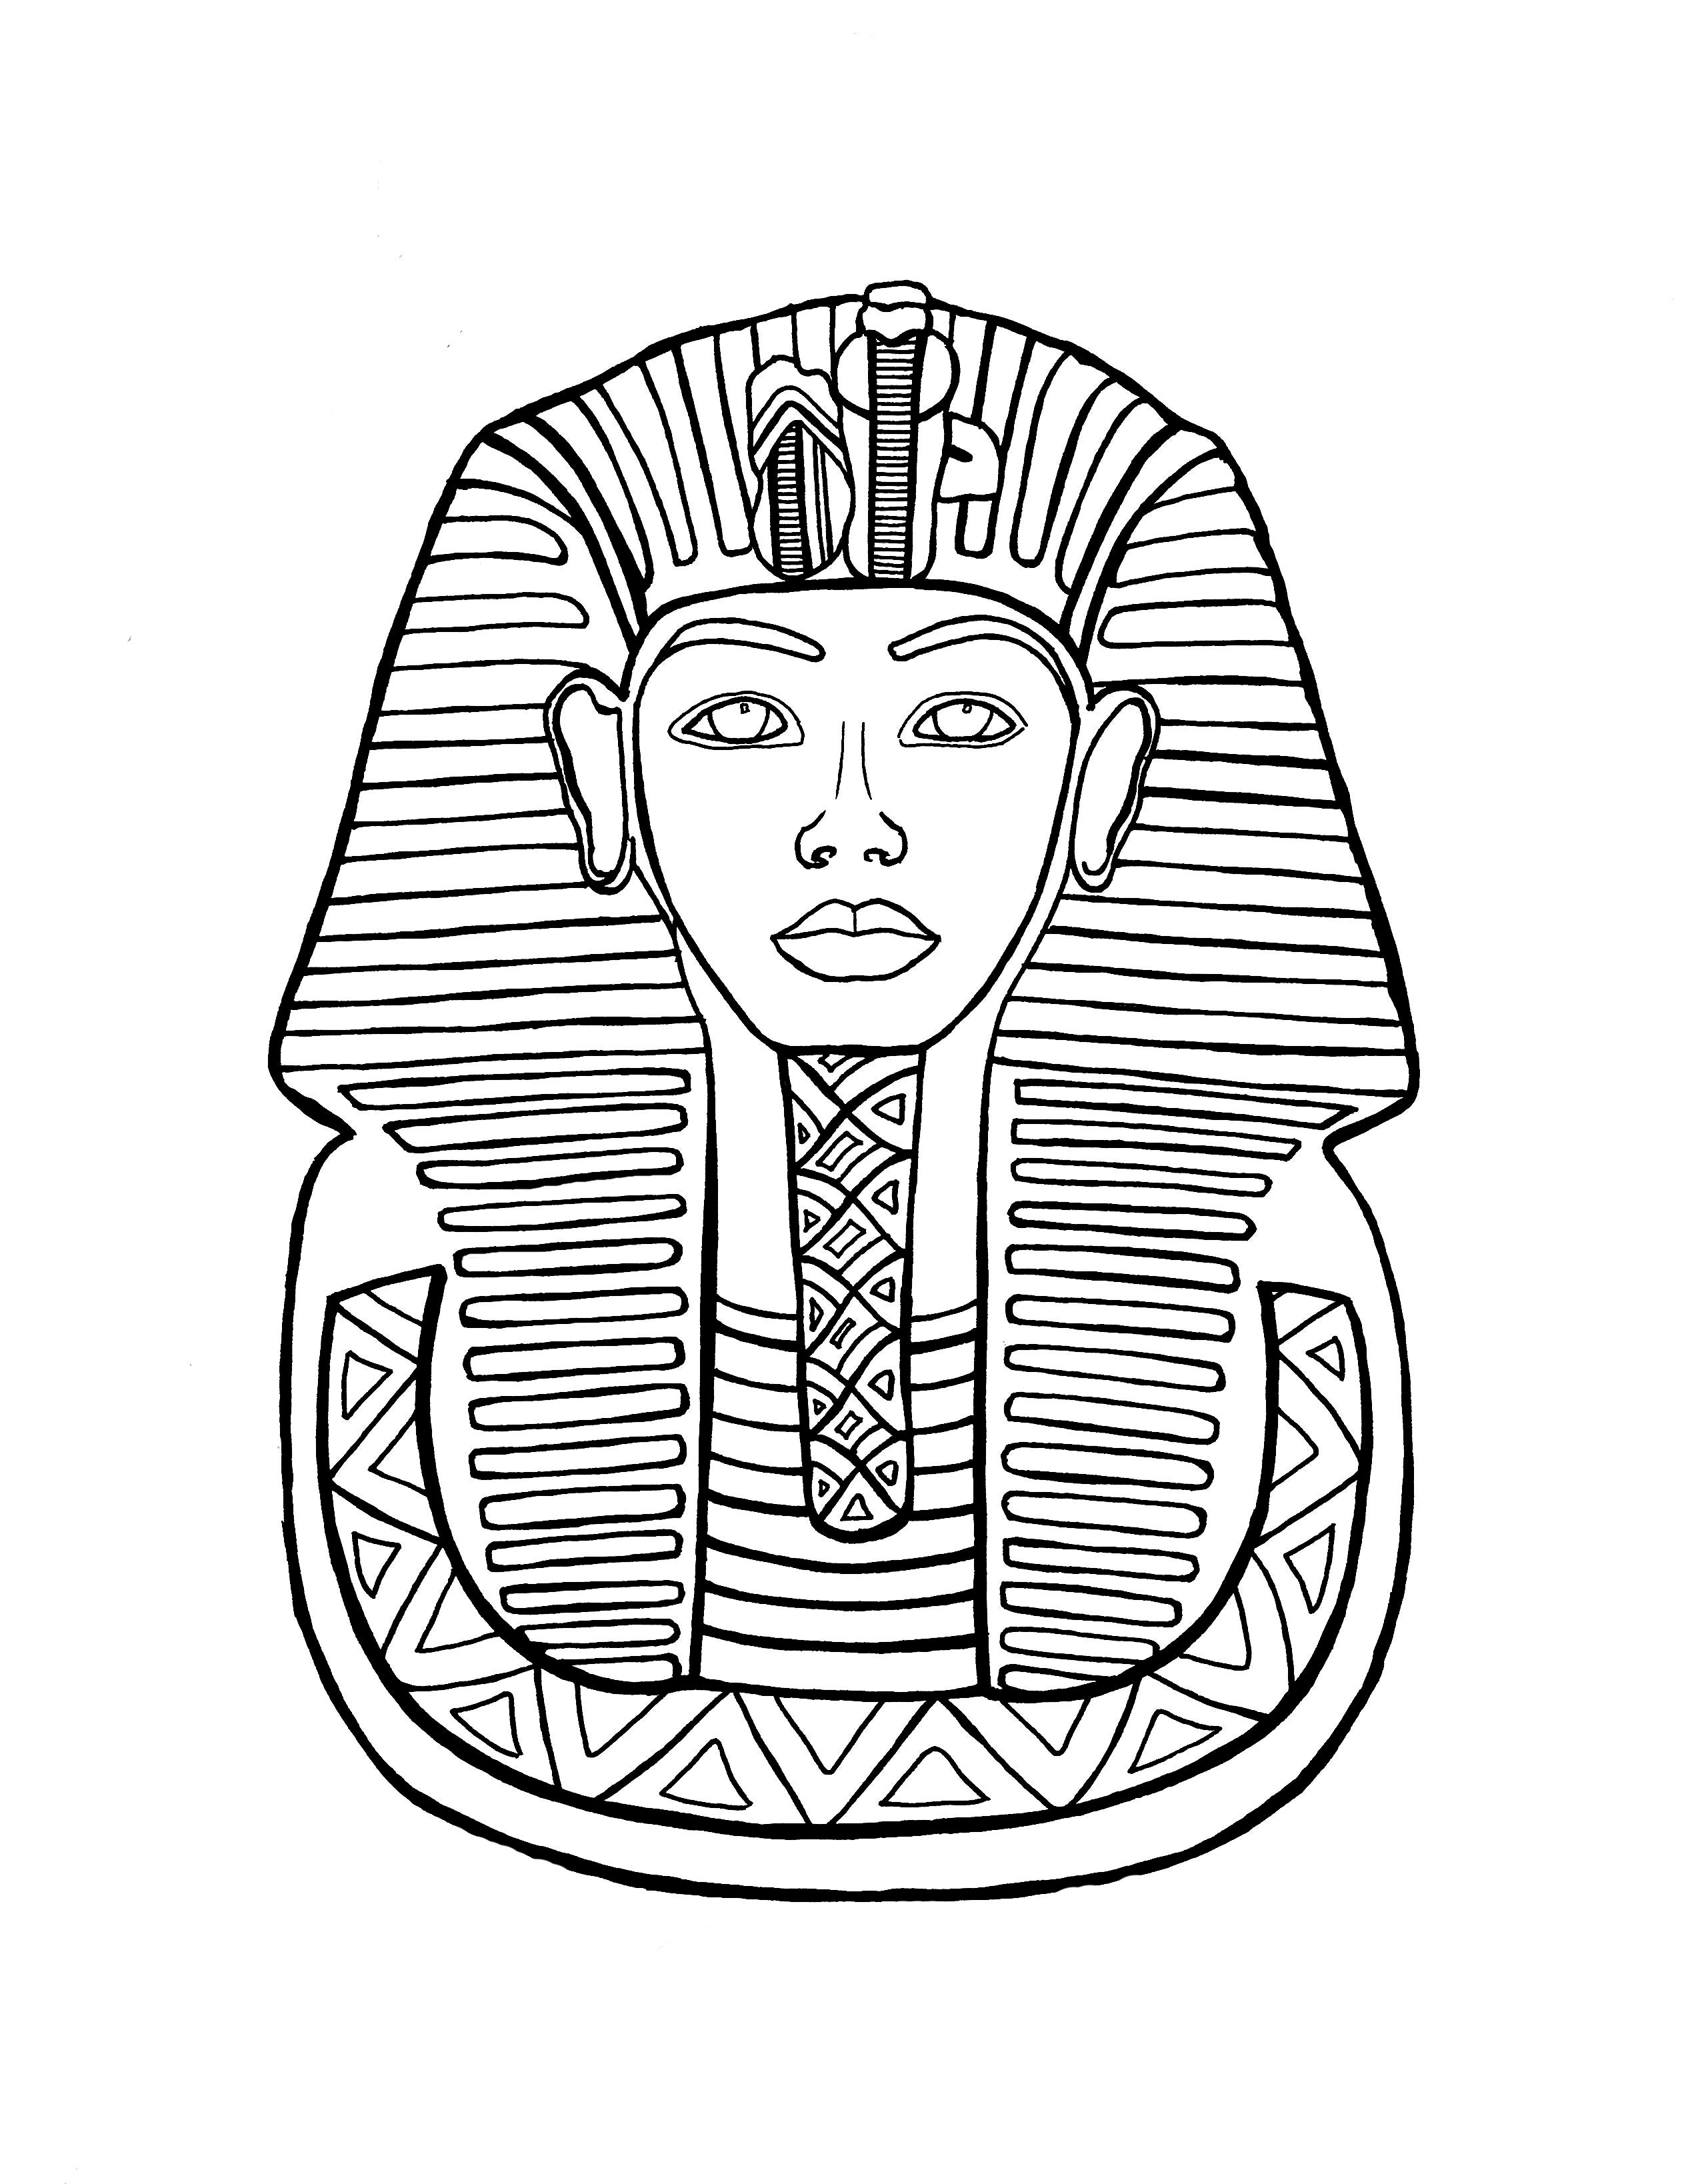 King tut cairo egypt â you